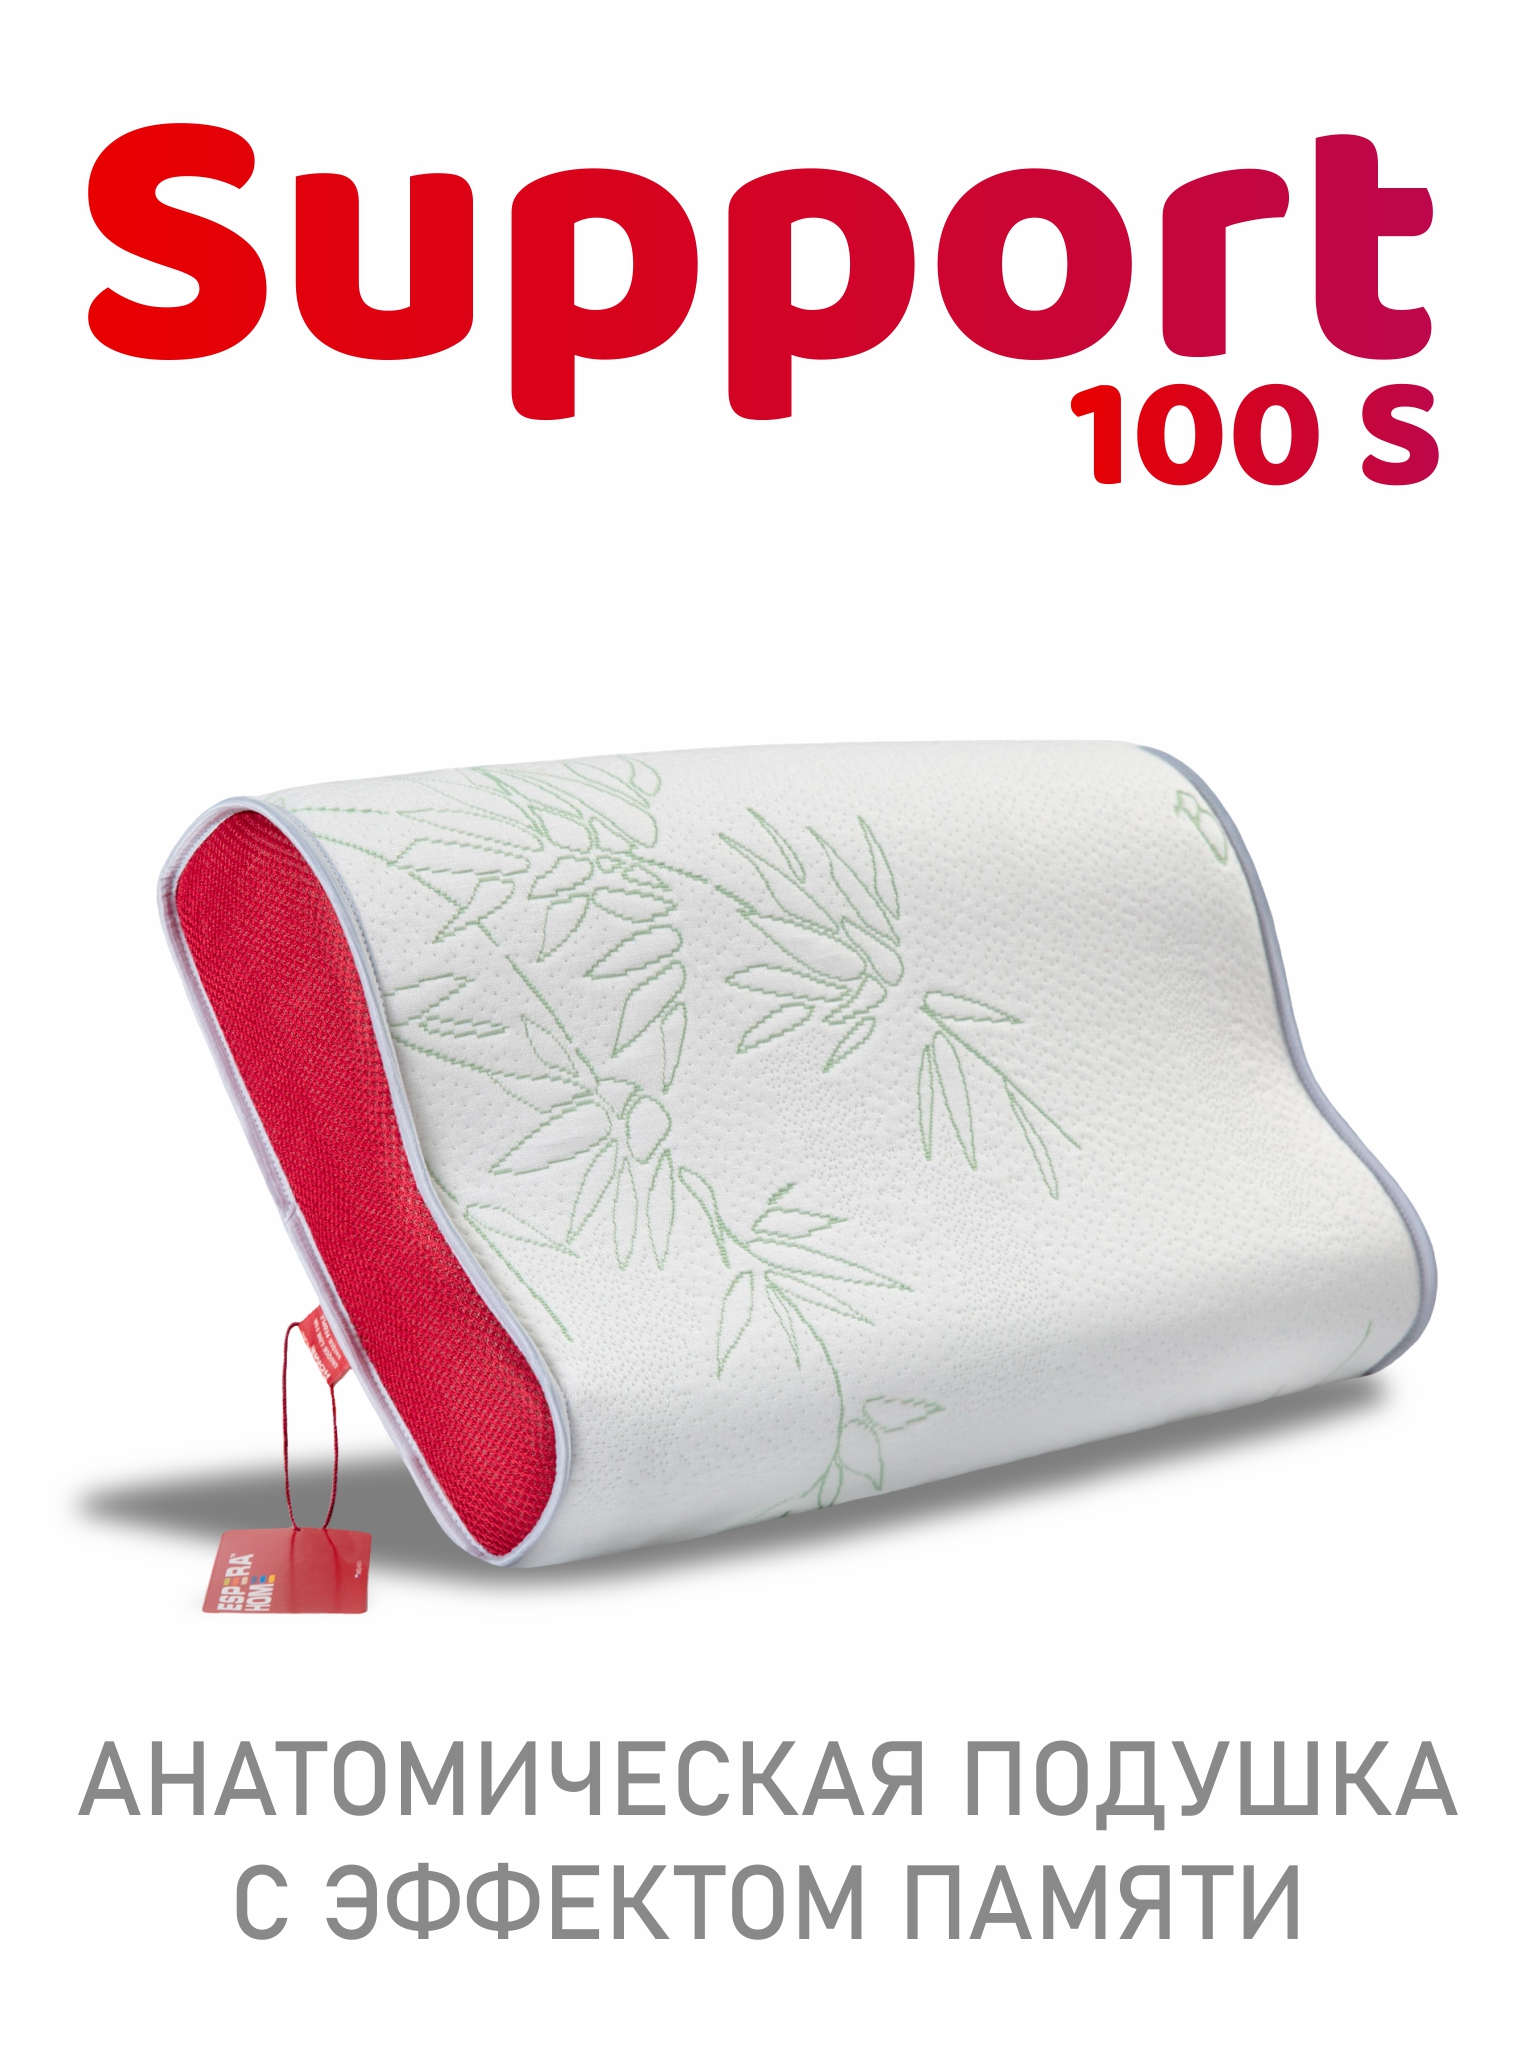 Подушка c эффектом памяти • Espera Support 100S / Эспера Супорт 100С  • Memory Foam 30 х 50 см